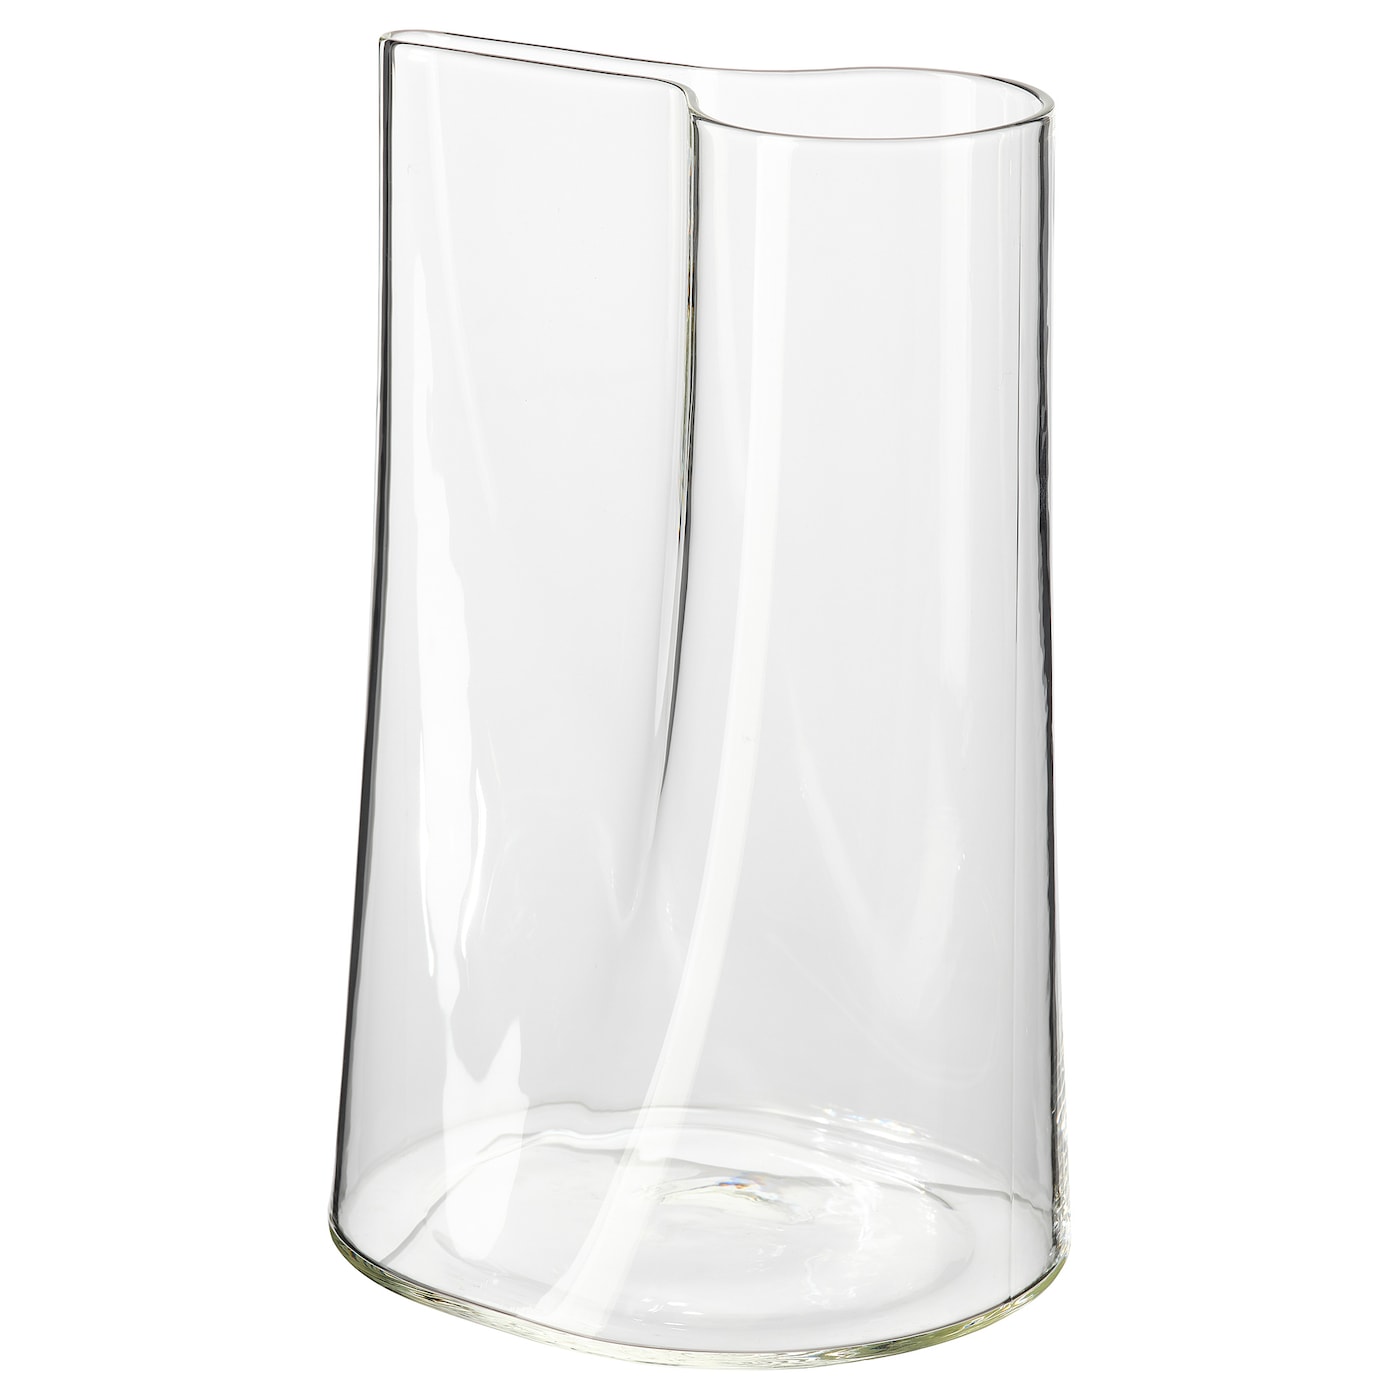 CHILIFRUKT ЧИЛИФРУКТ Ваза/лейка, прозрачное стекло, 21 см IKEA